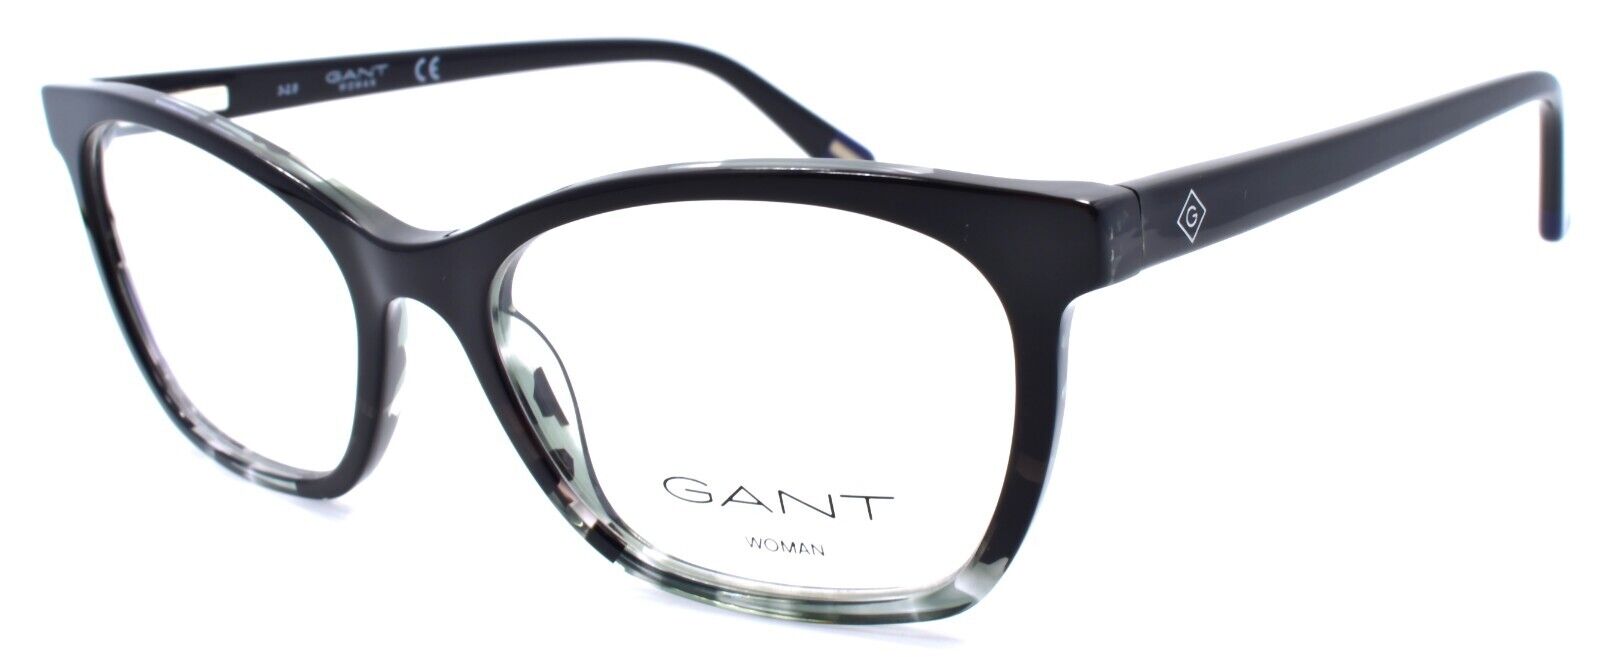 1-GANT GA4095 055 Women's Eyeglasses Frames 53-17-140 Black Havana-889214107091-IKSpecs